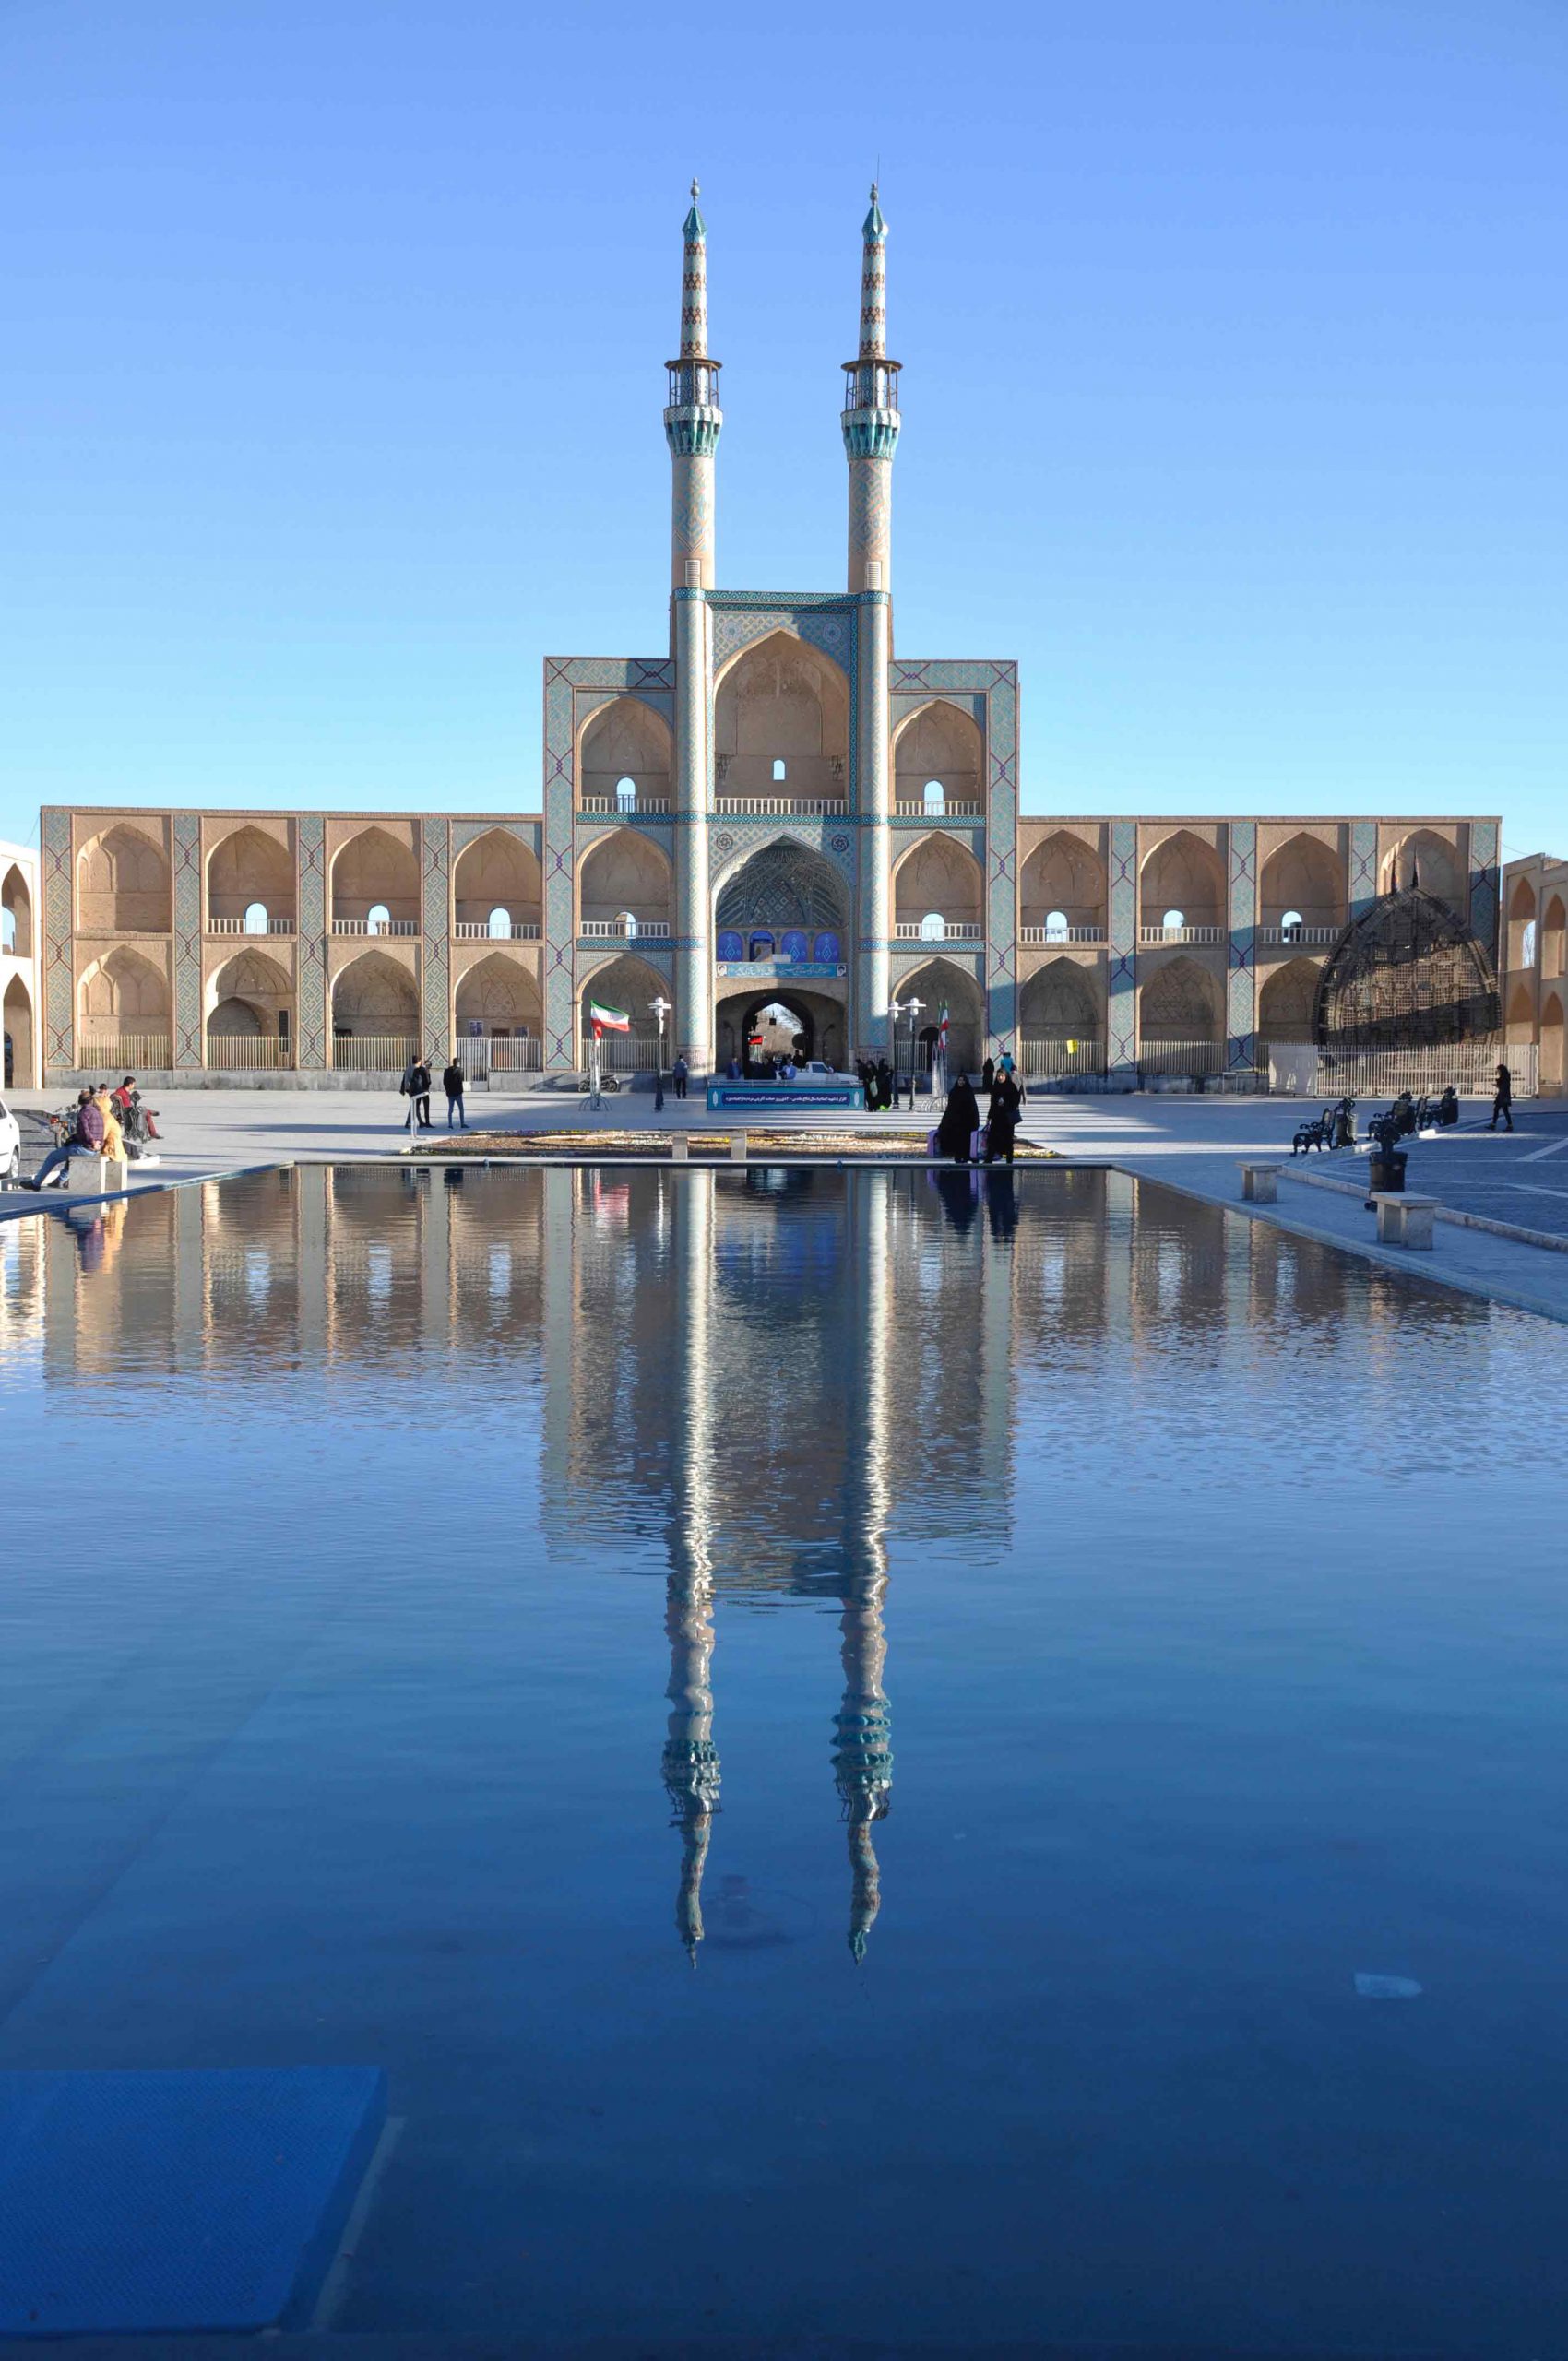 مجموعه میرچخماق, Mir Chakhmagh Complex, Yazd